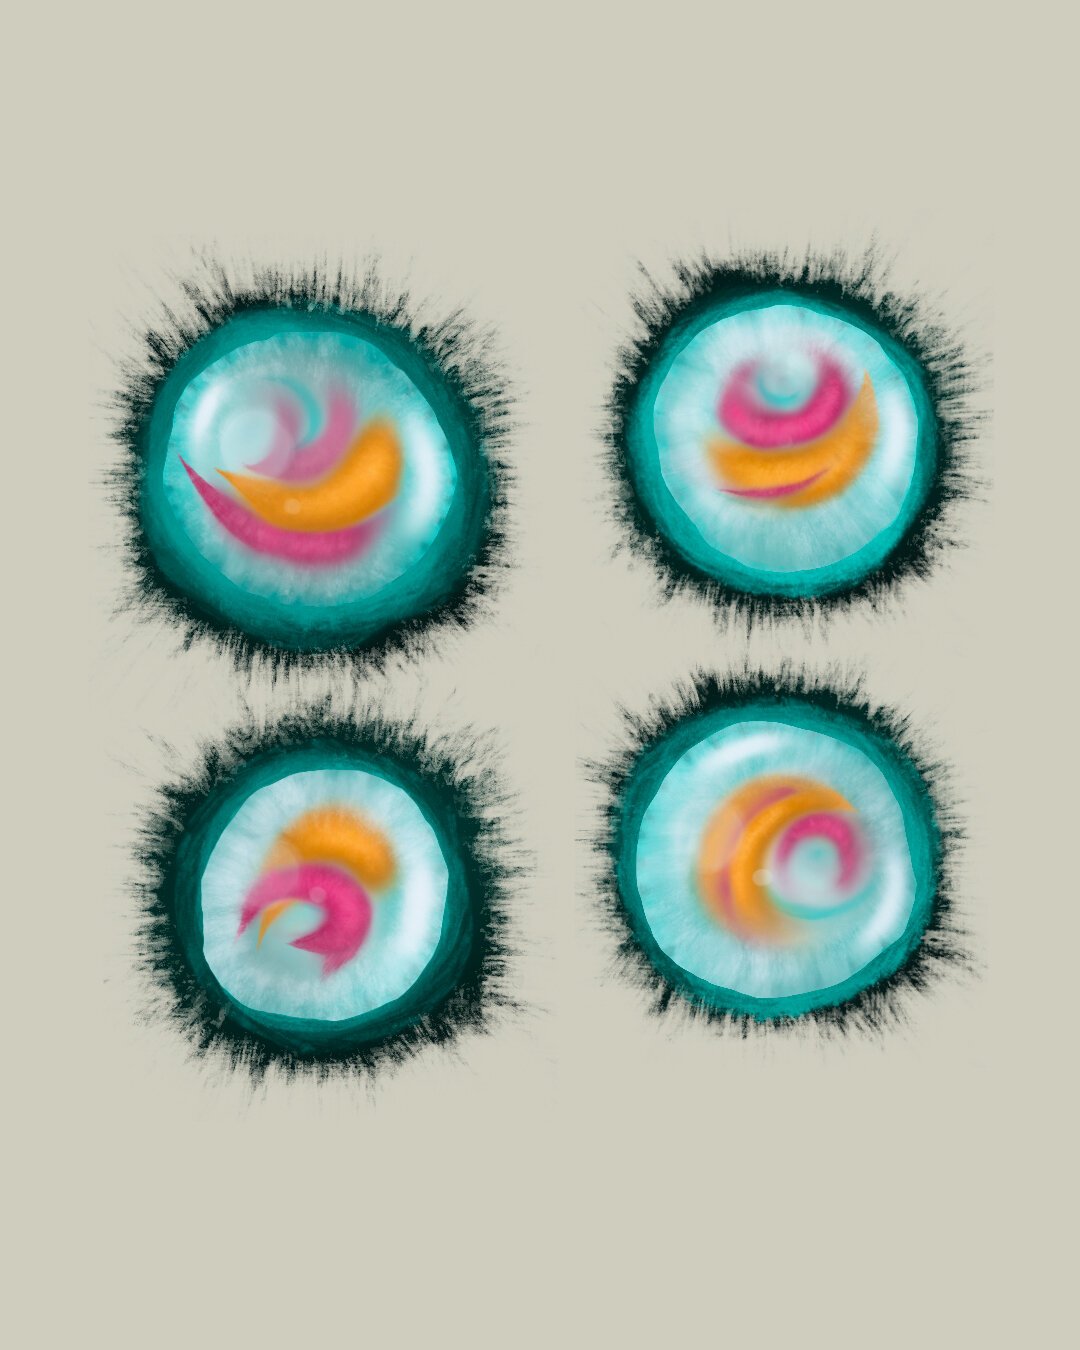 Four sea urchins